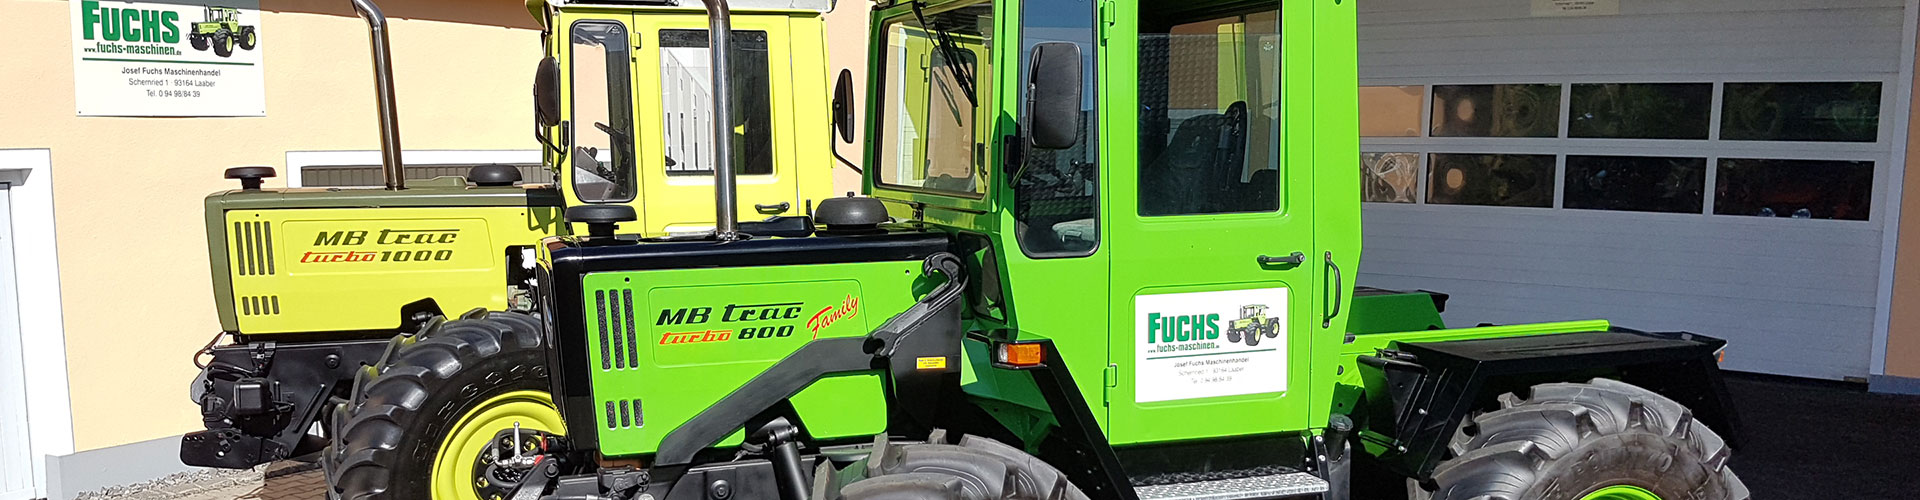 Fuchs Maschinenhandel Laaber Oberpfalz Traktoren Bagger Lader 